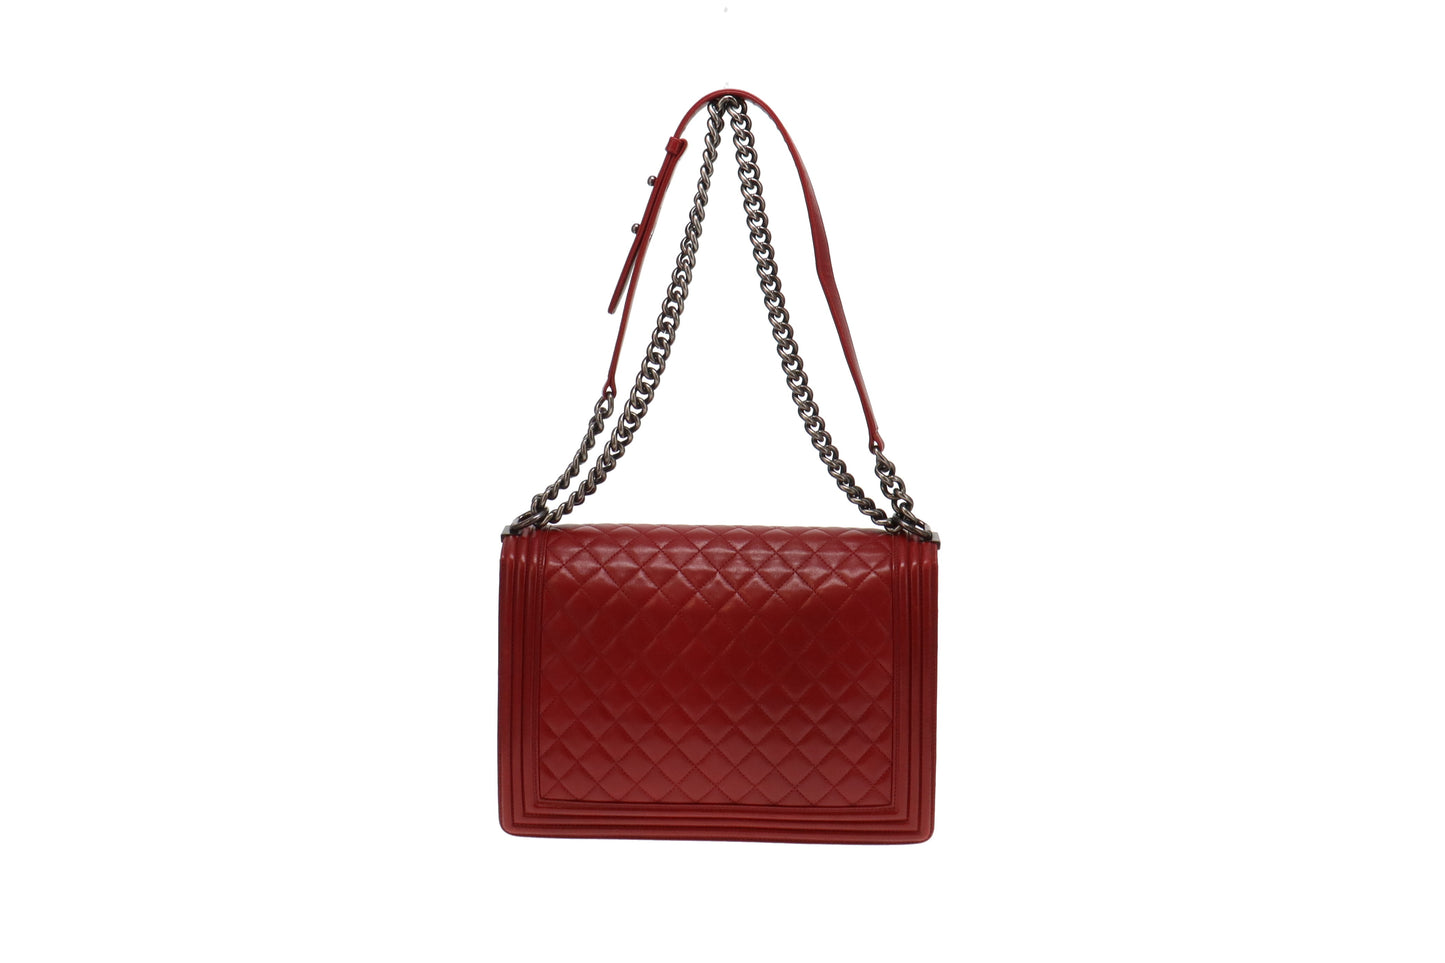 Chanel Boy Bag Large Red Lambskin